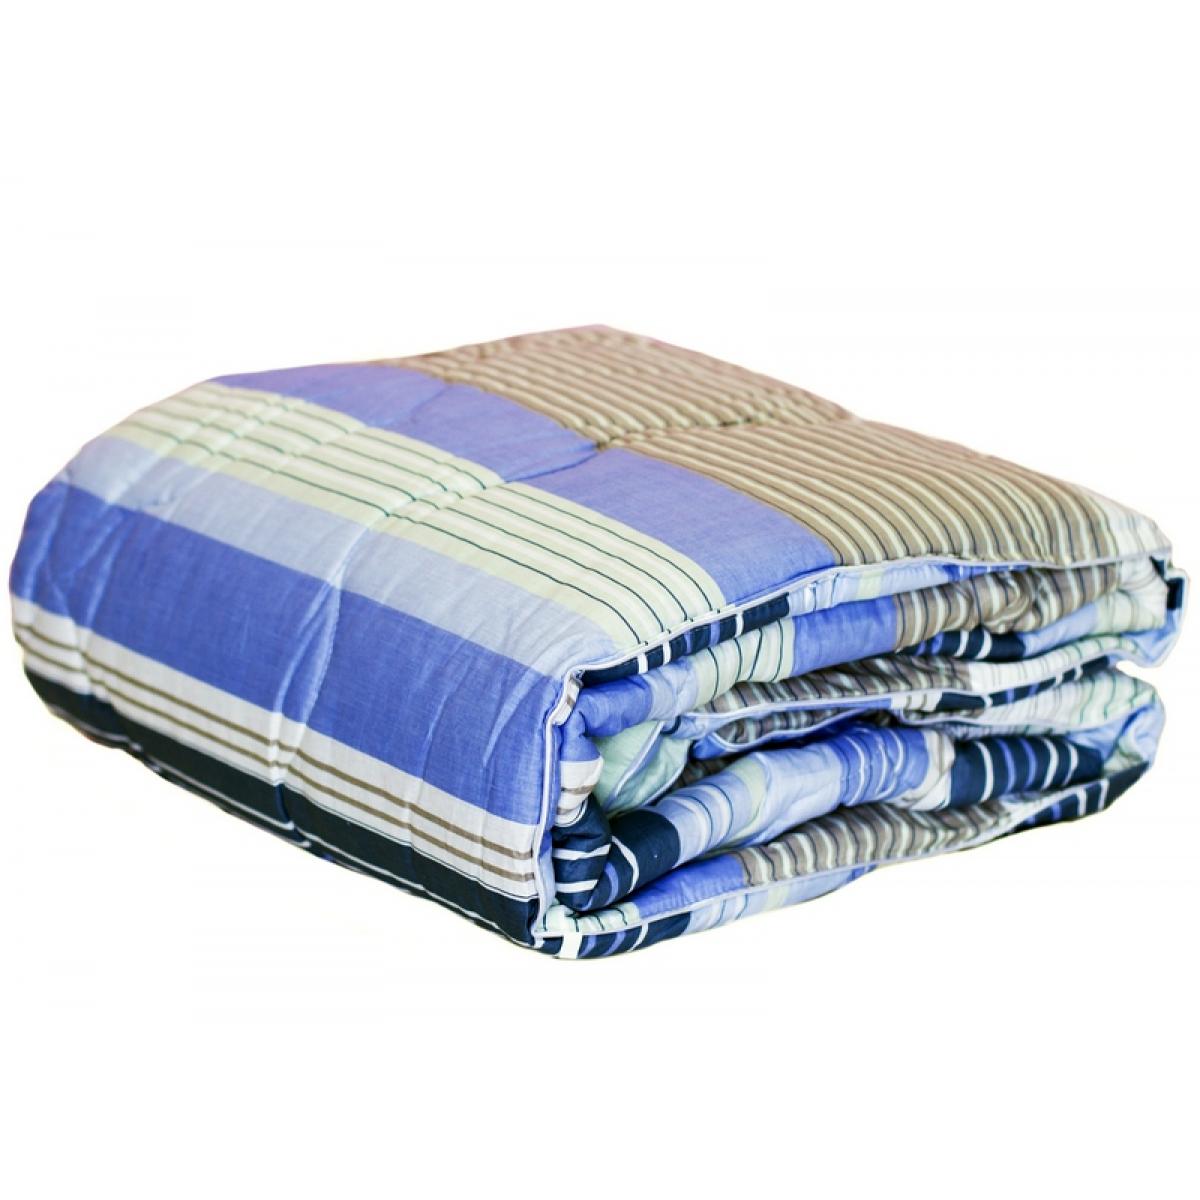 Купить теплое легкое одеяло 1.5. Одеяло ватное премиум 172х205. Одеяло меринос зимнее 172*205. Одеяло ватное 172x205, 140x205. Одеяло ватное 172x205.